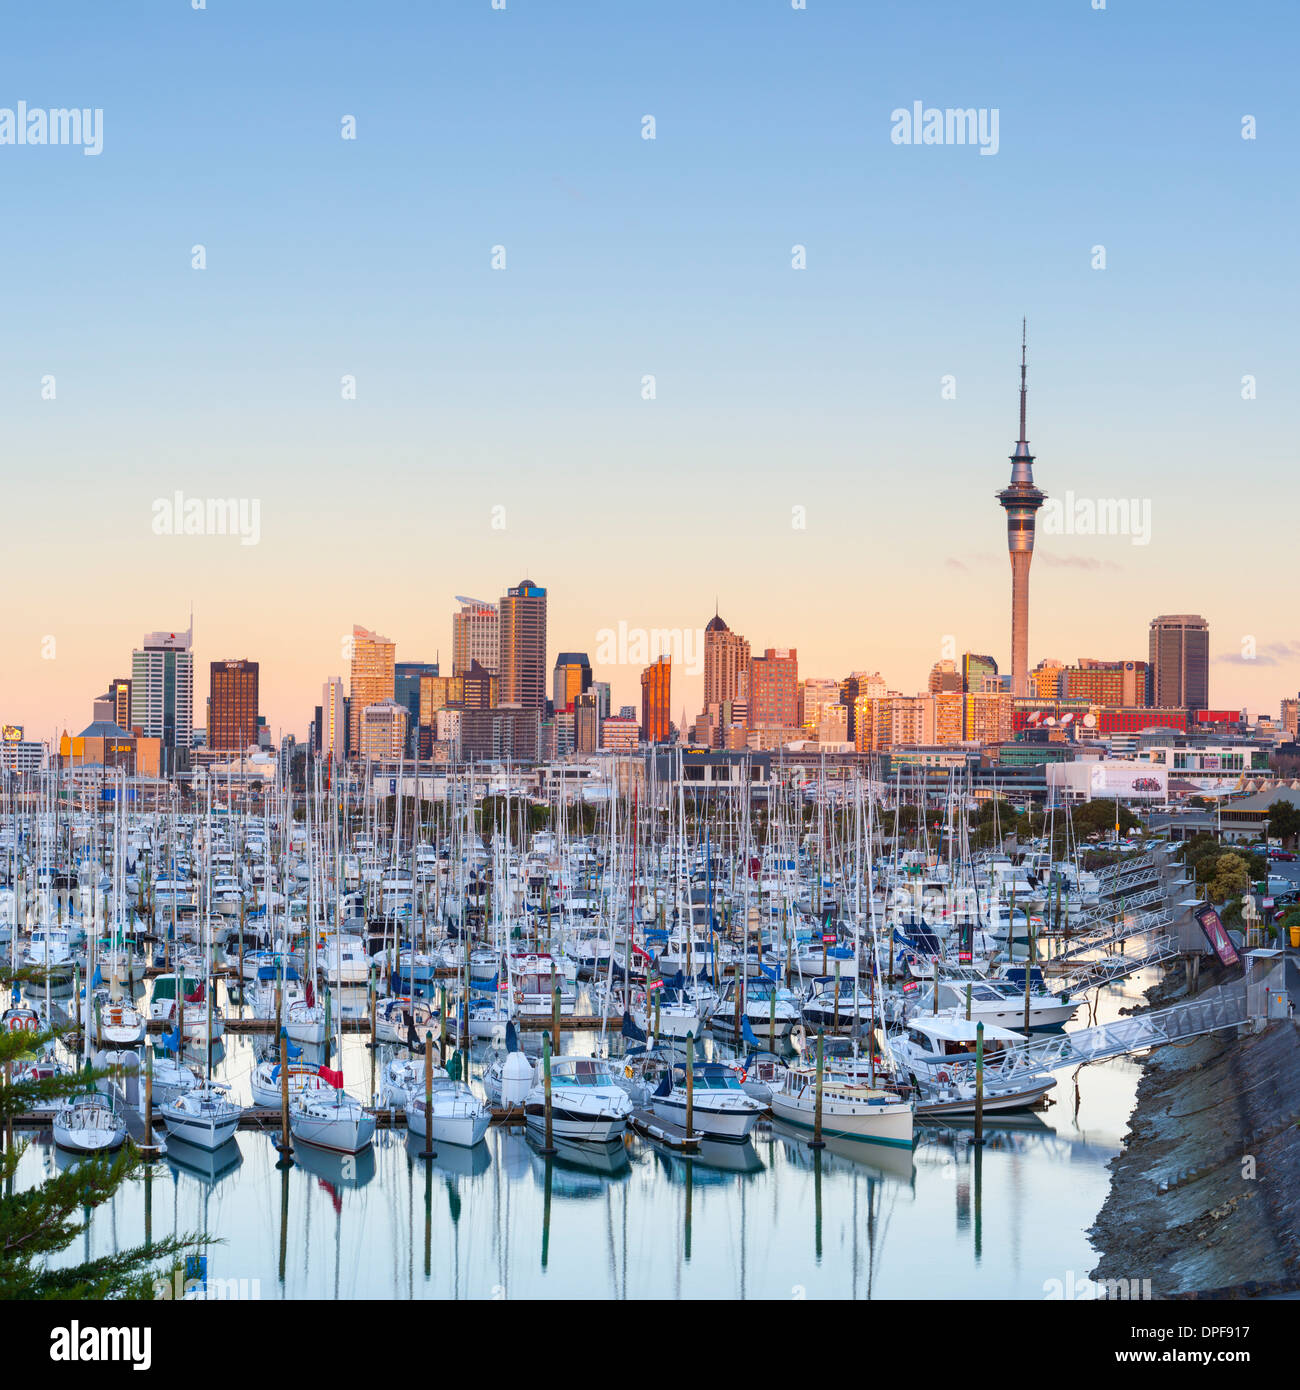 Westhaven Marina and city skyline illuminated at sunset, Waitemata Harbour, Auckland, North Island, New Zealand, Pacific Stock Photo